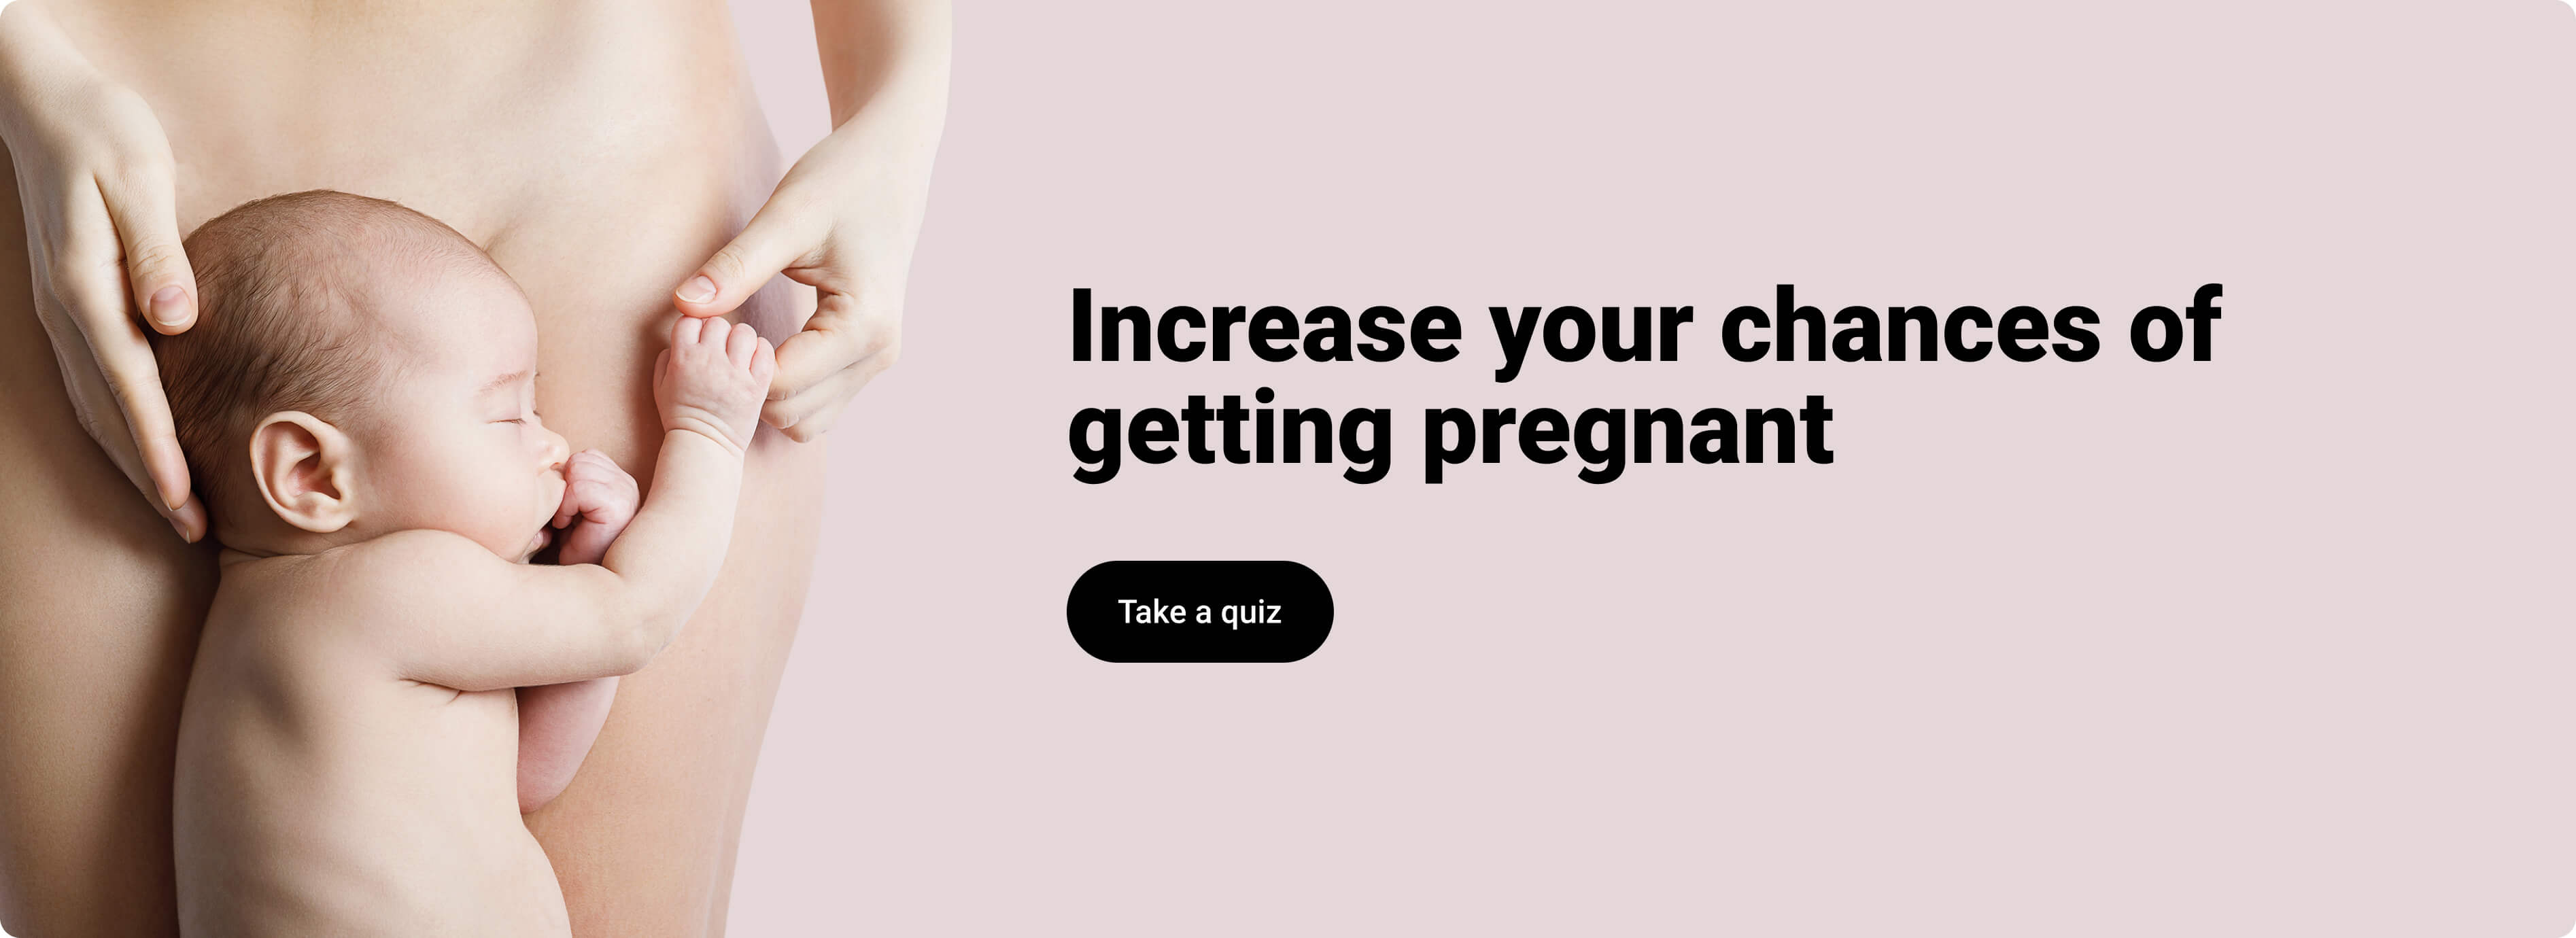 Make Mother Pregnant